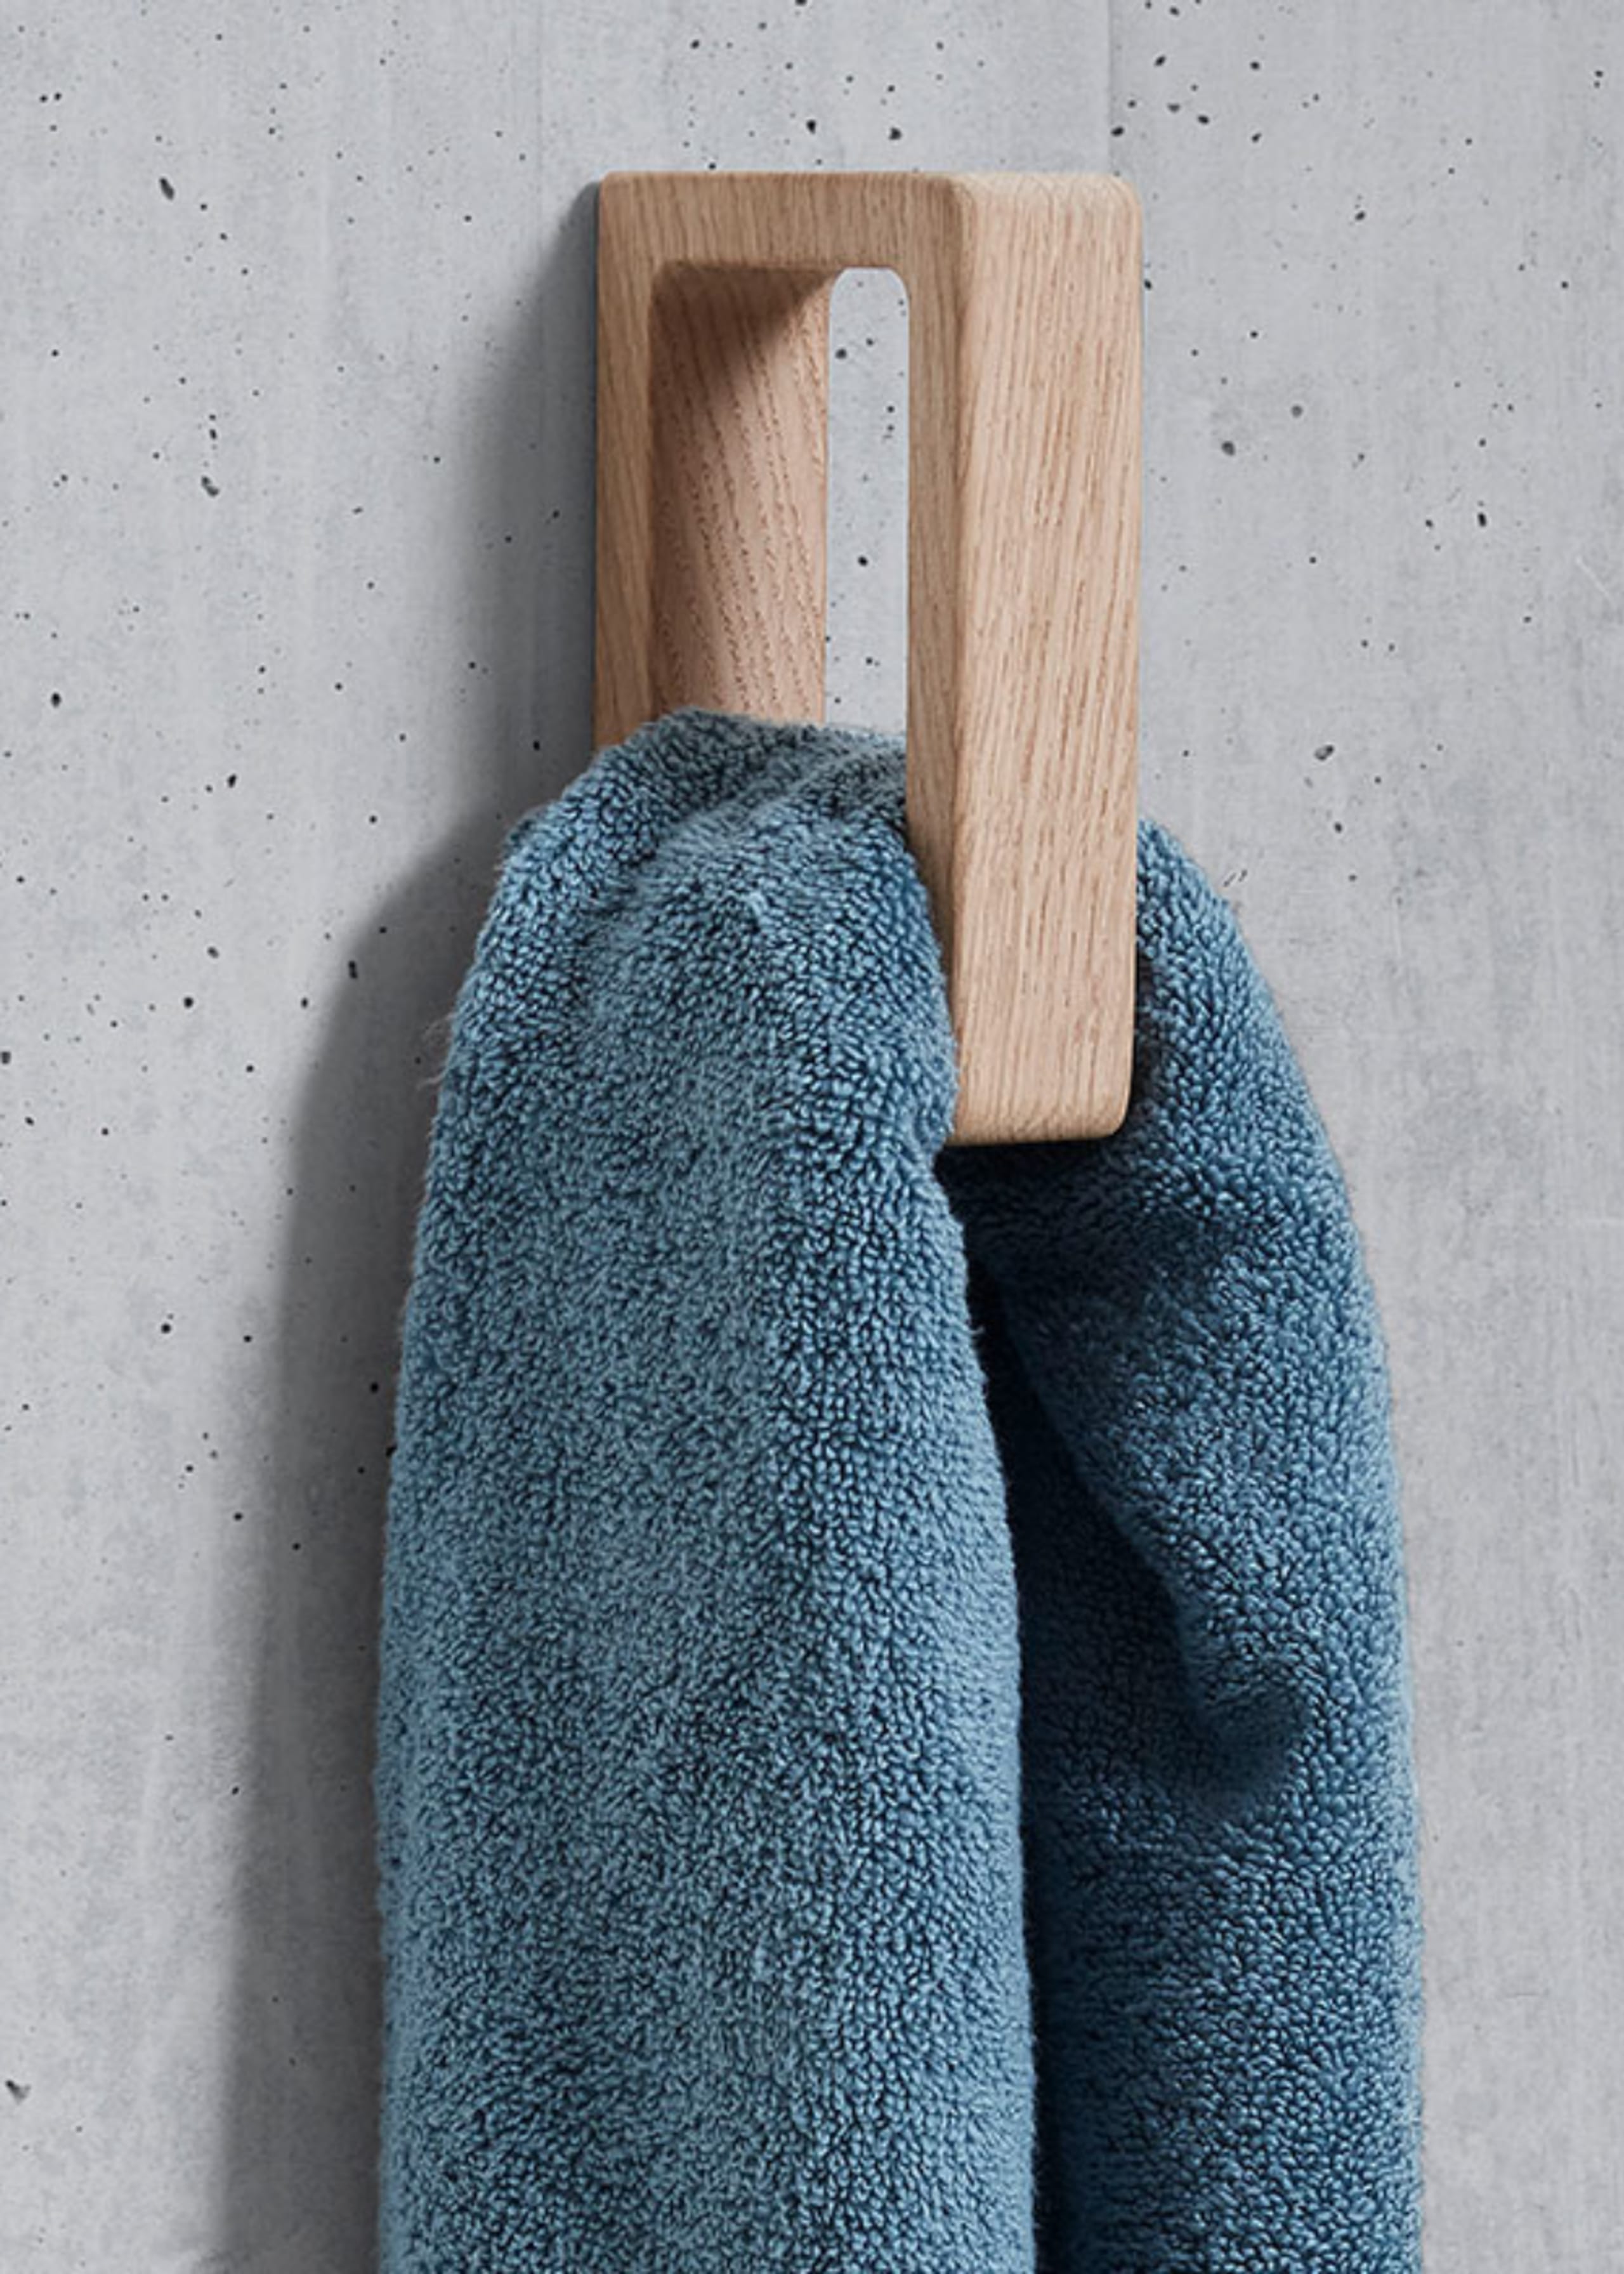 Andersen Furniture - Towell Hanger - Towel Grip - Oak Lacquer